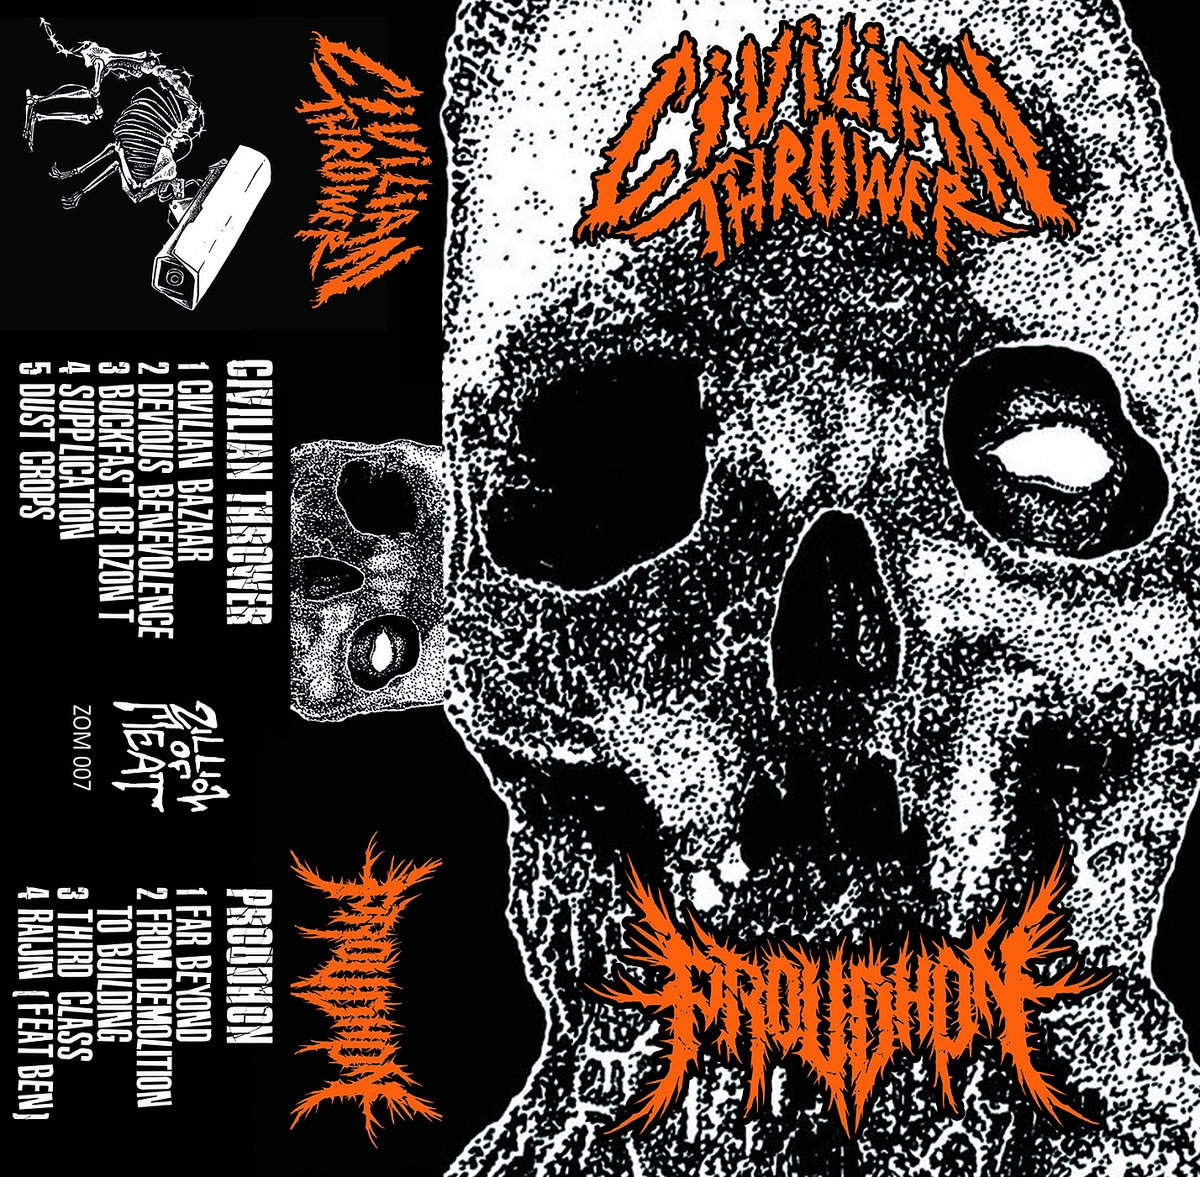 PROUDHON - Proudhon/Civilian Thrower cover 